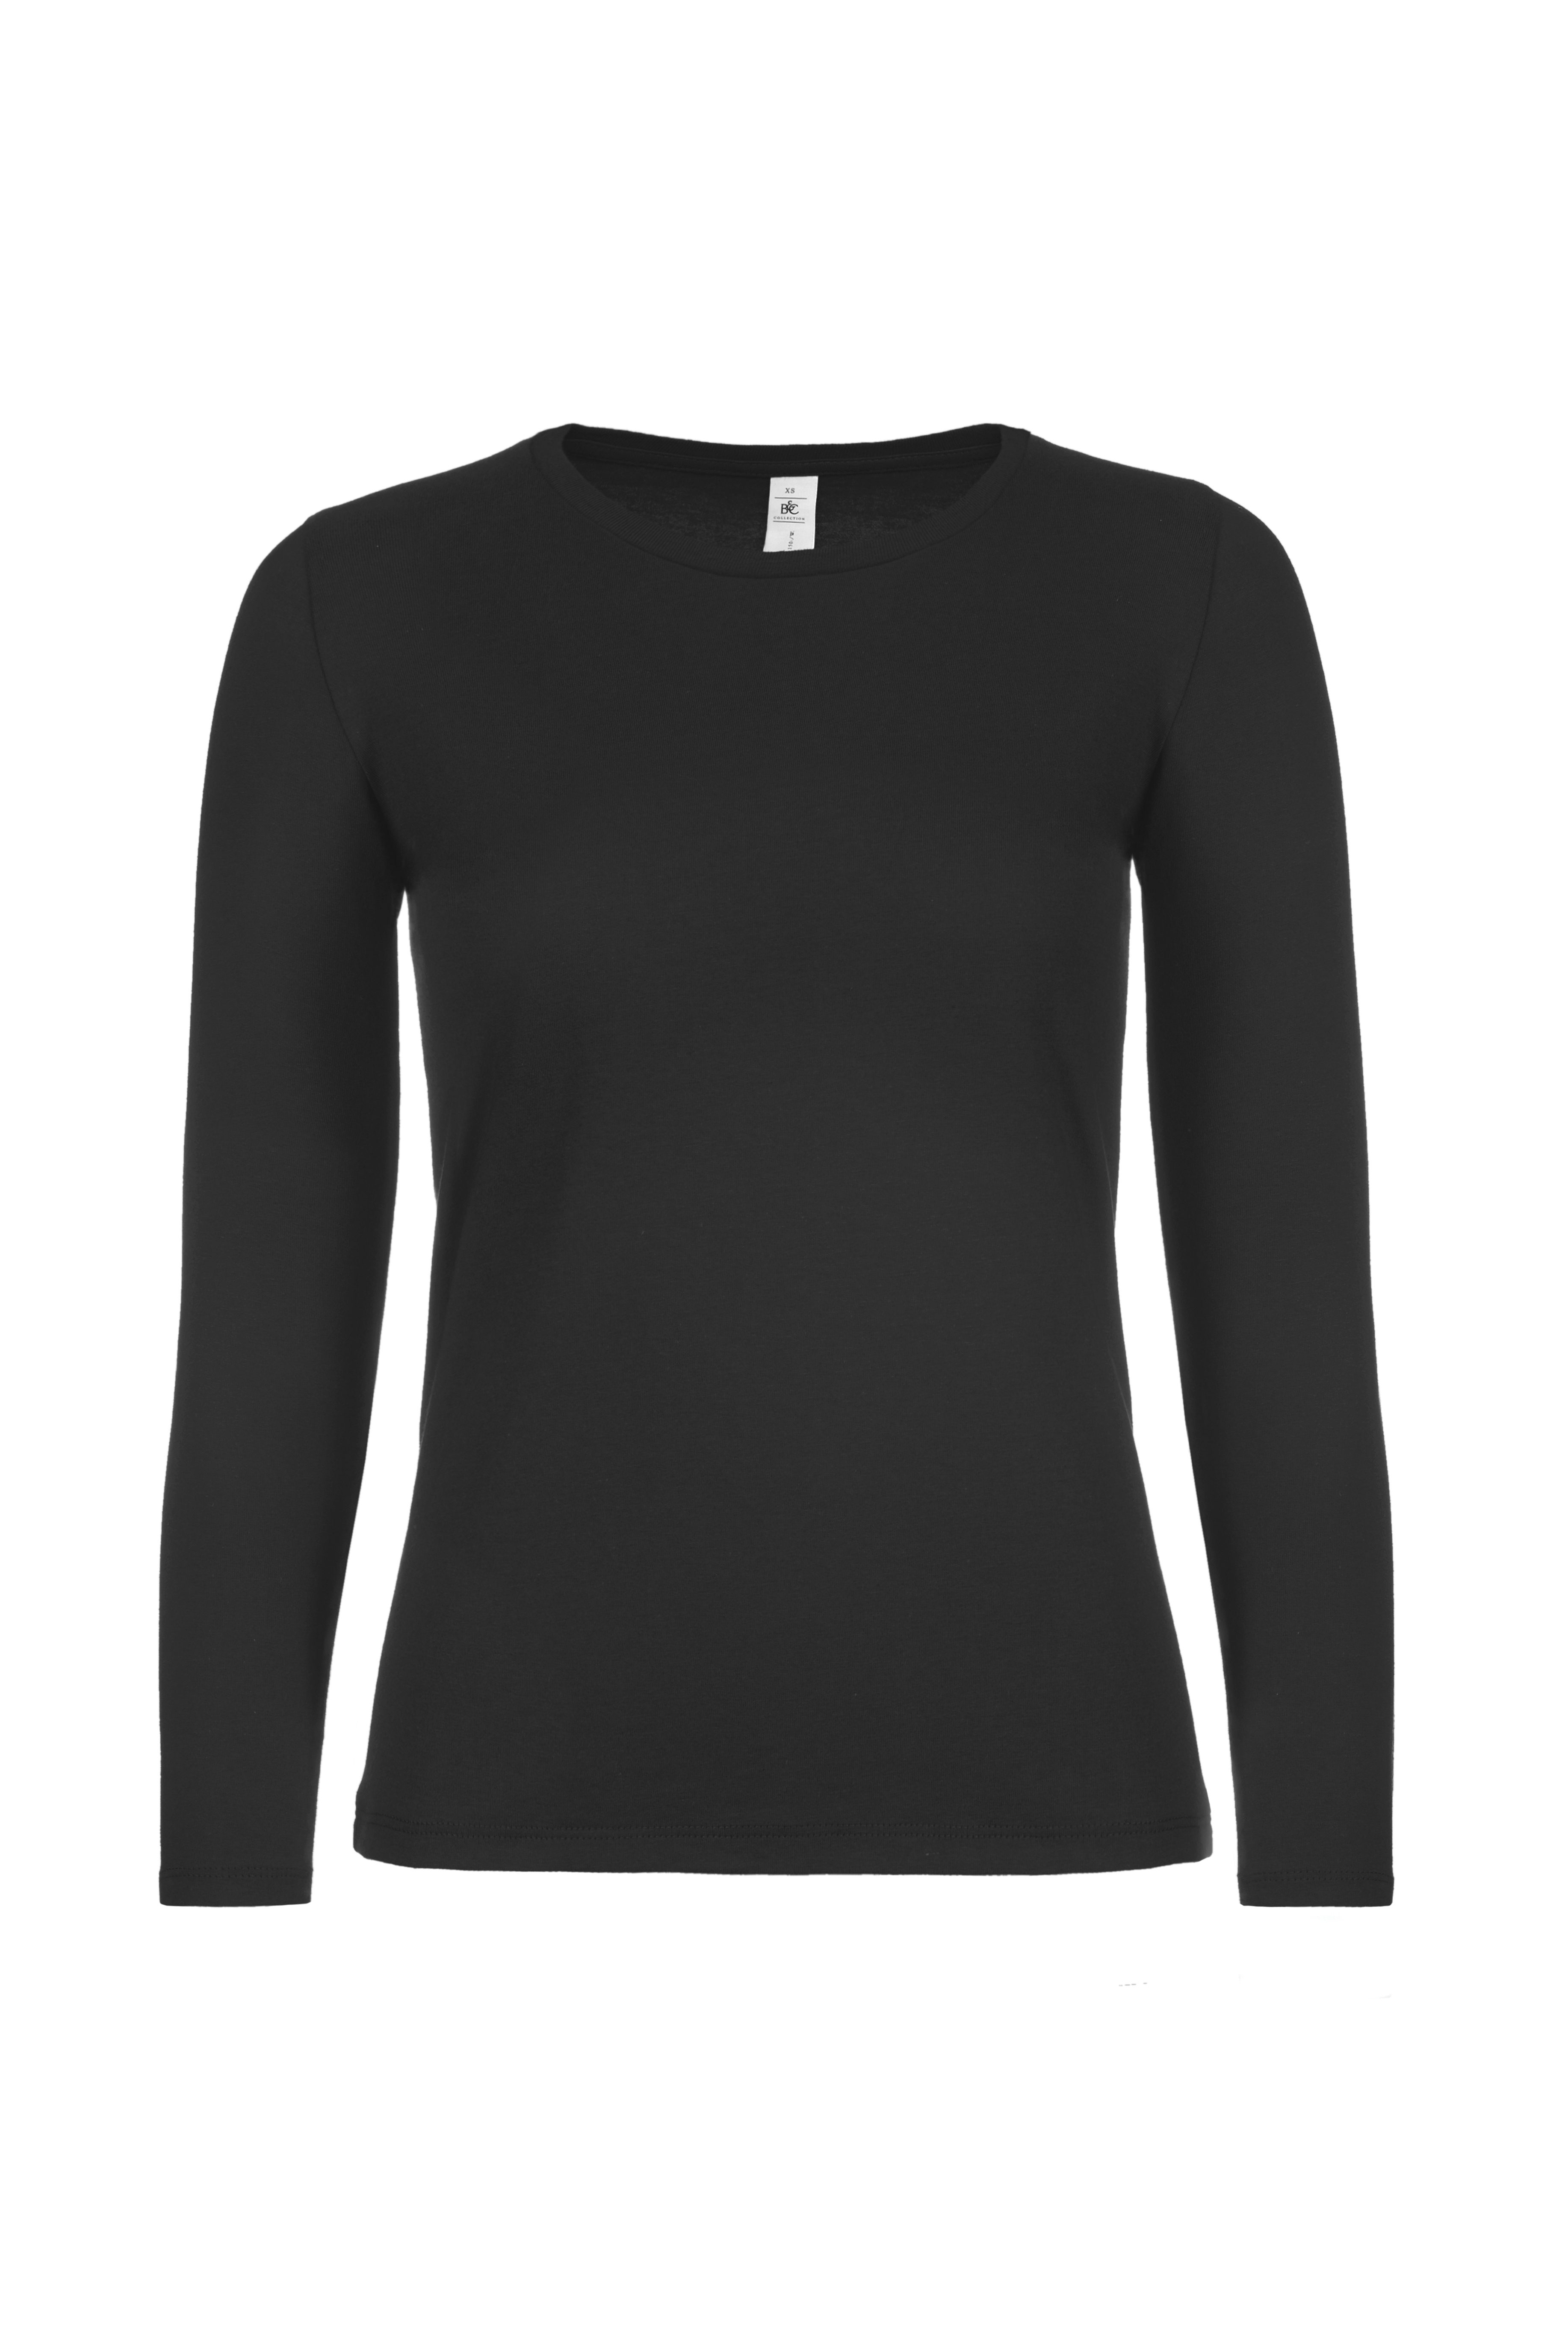 B&C Women-only Long Sleeve T-shirt (B211F) - Logo Studio Workwear